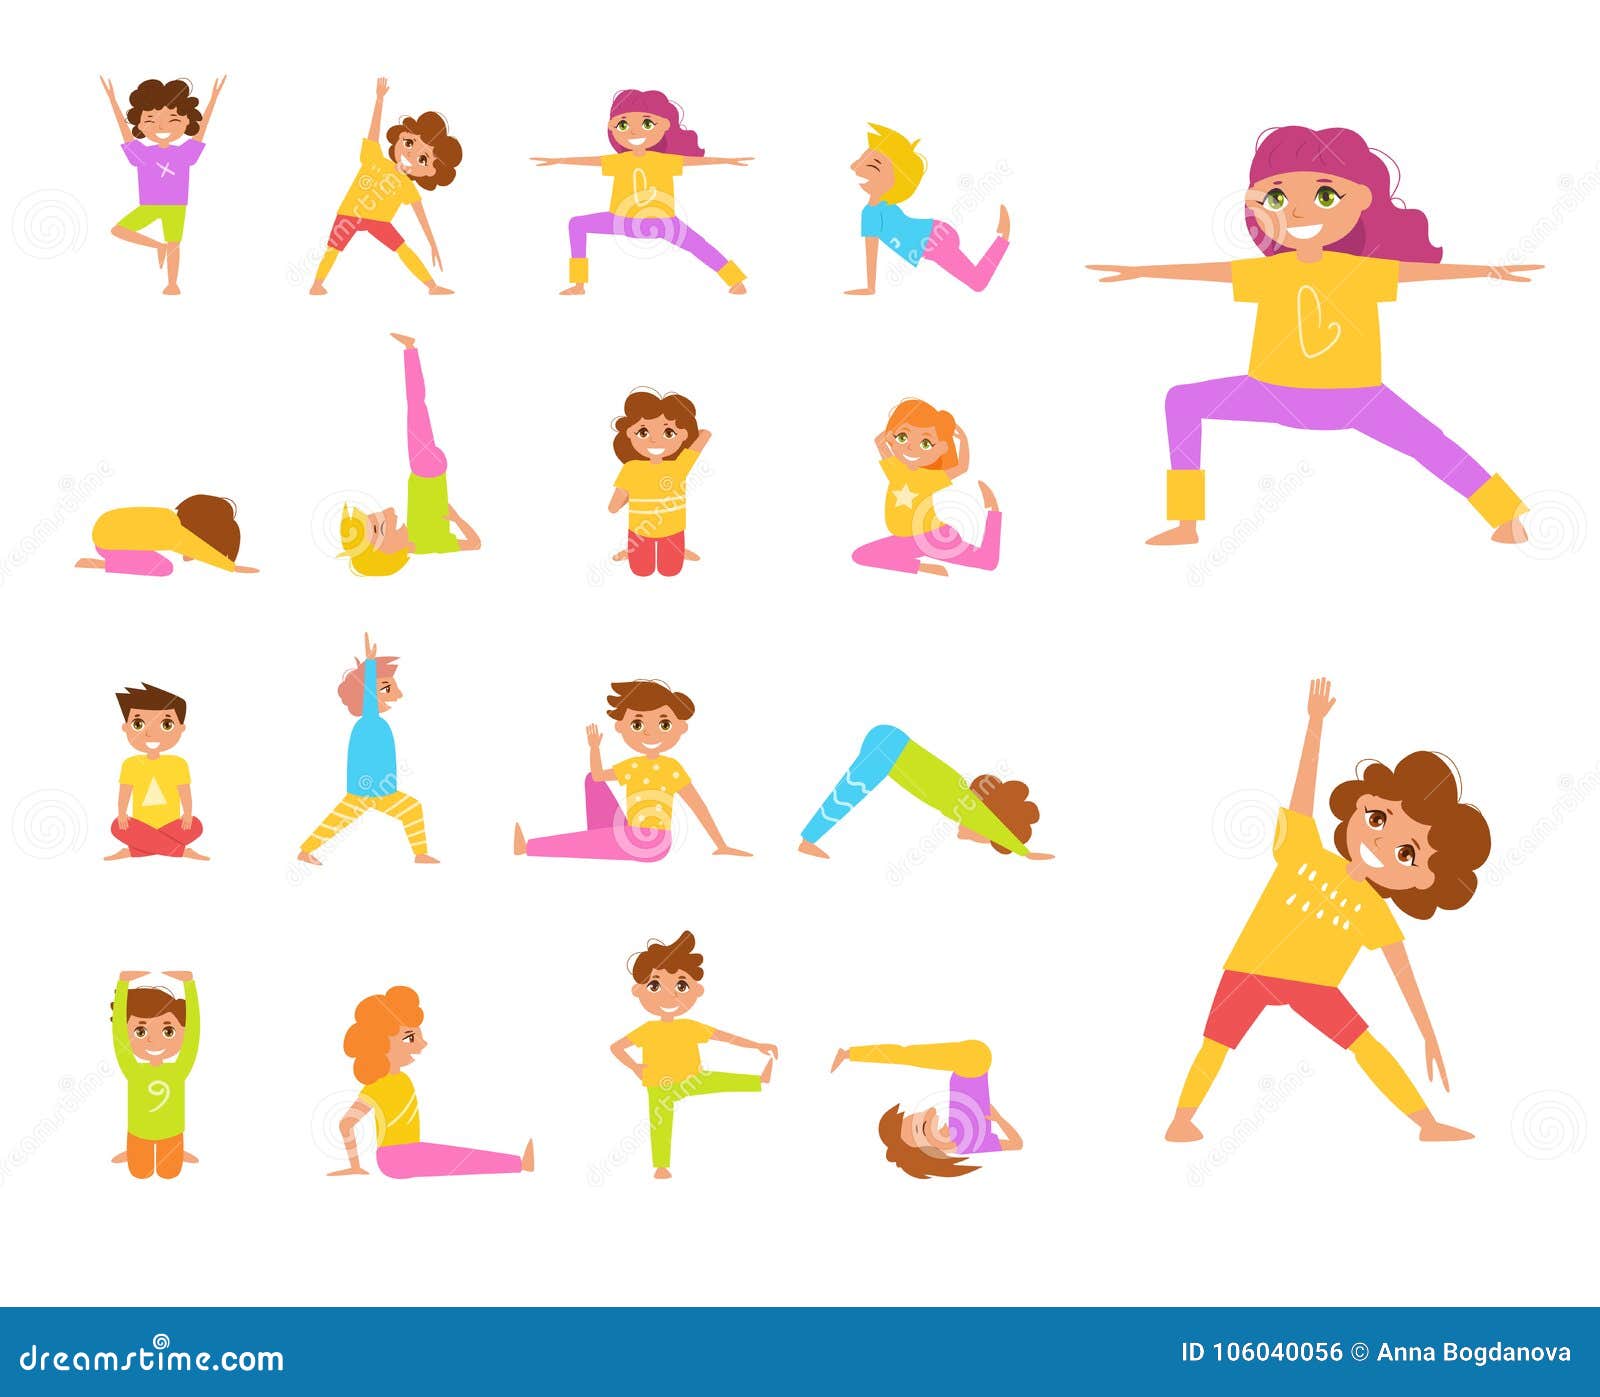 Yoga Asana Pose Ladybug Graphic Illustration Stock Vector (Royalty Free)  1054097633 | Shutterstock